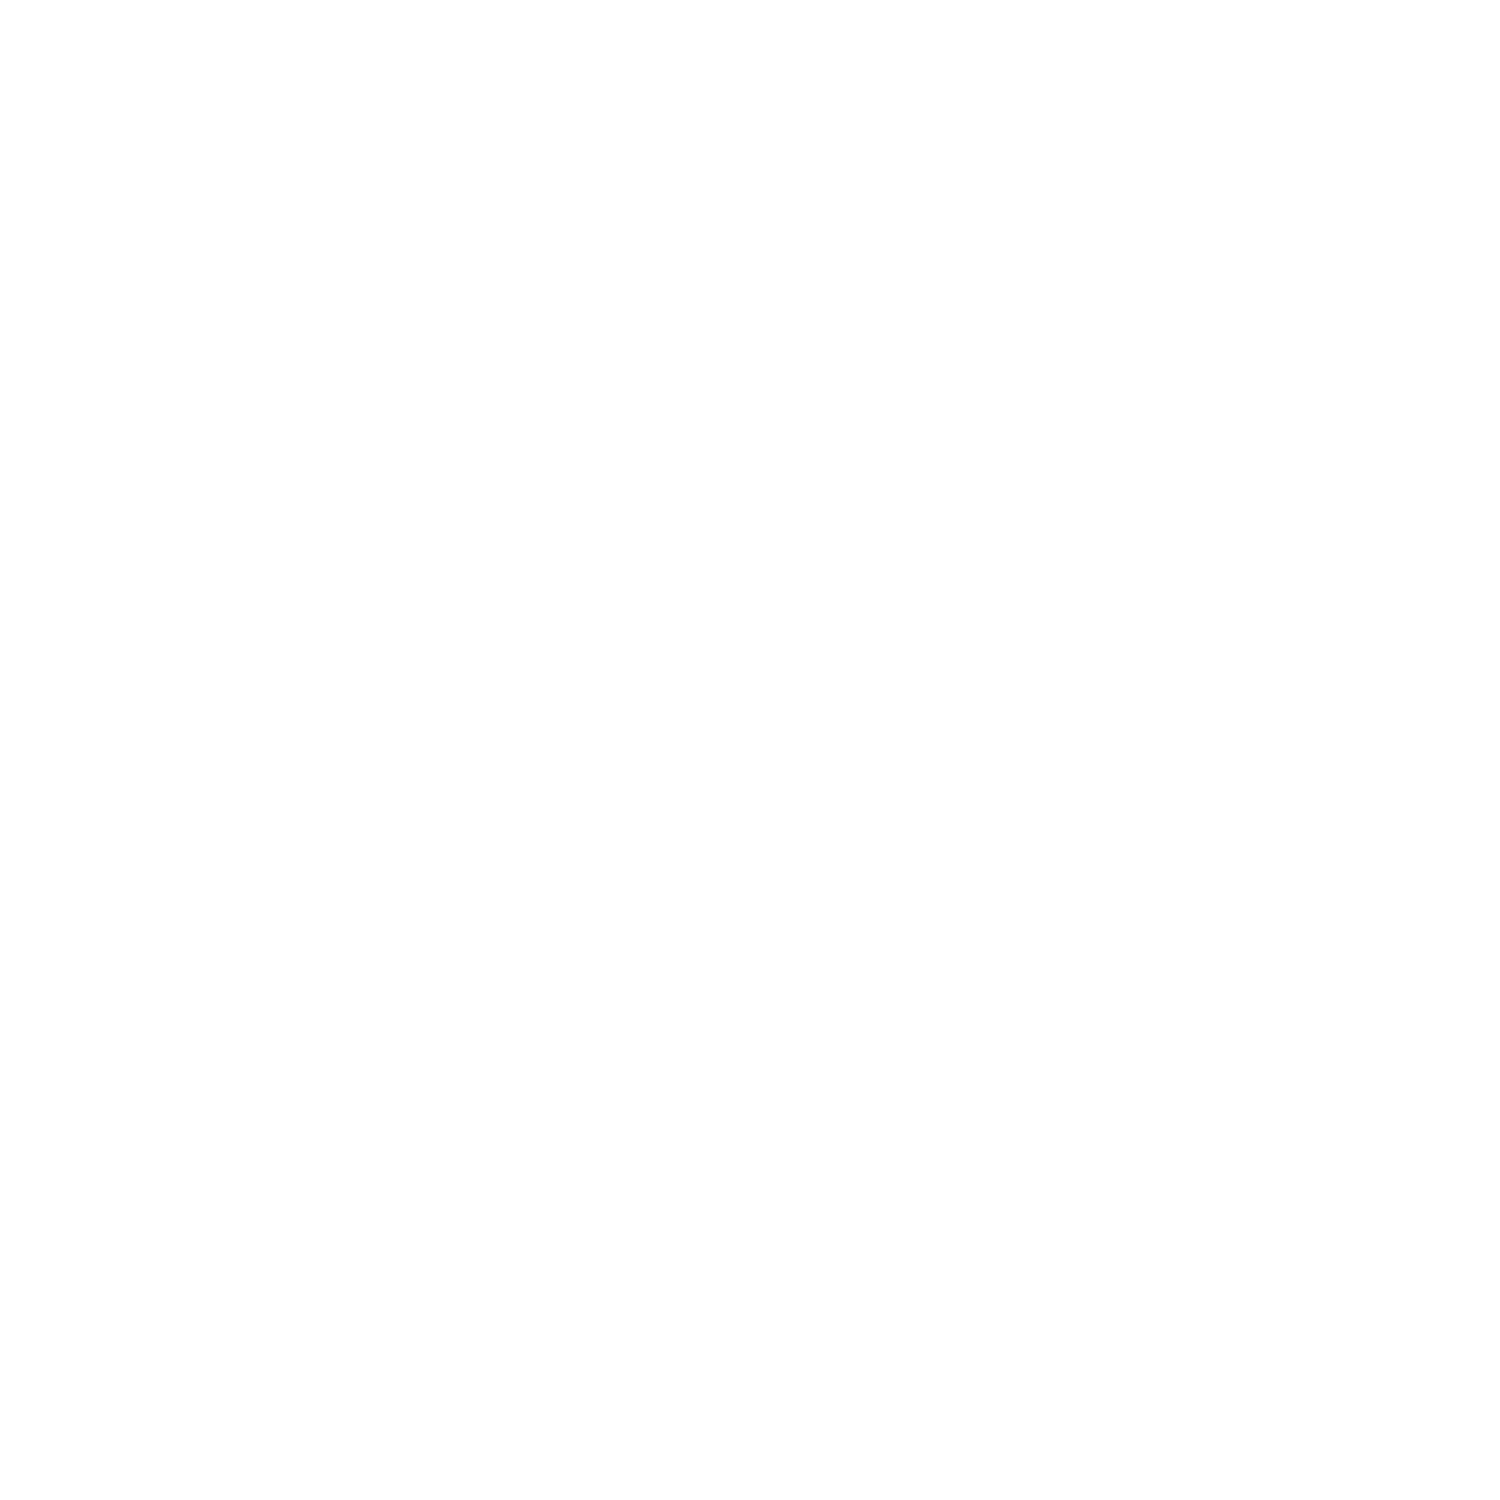 Storyteller Videography